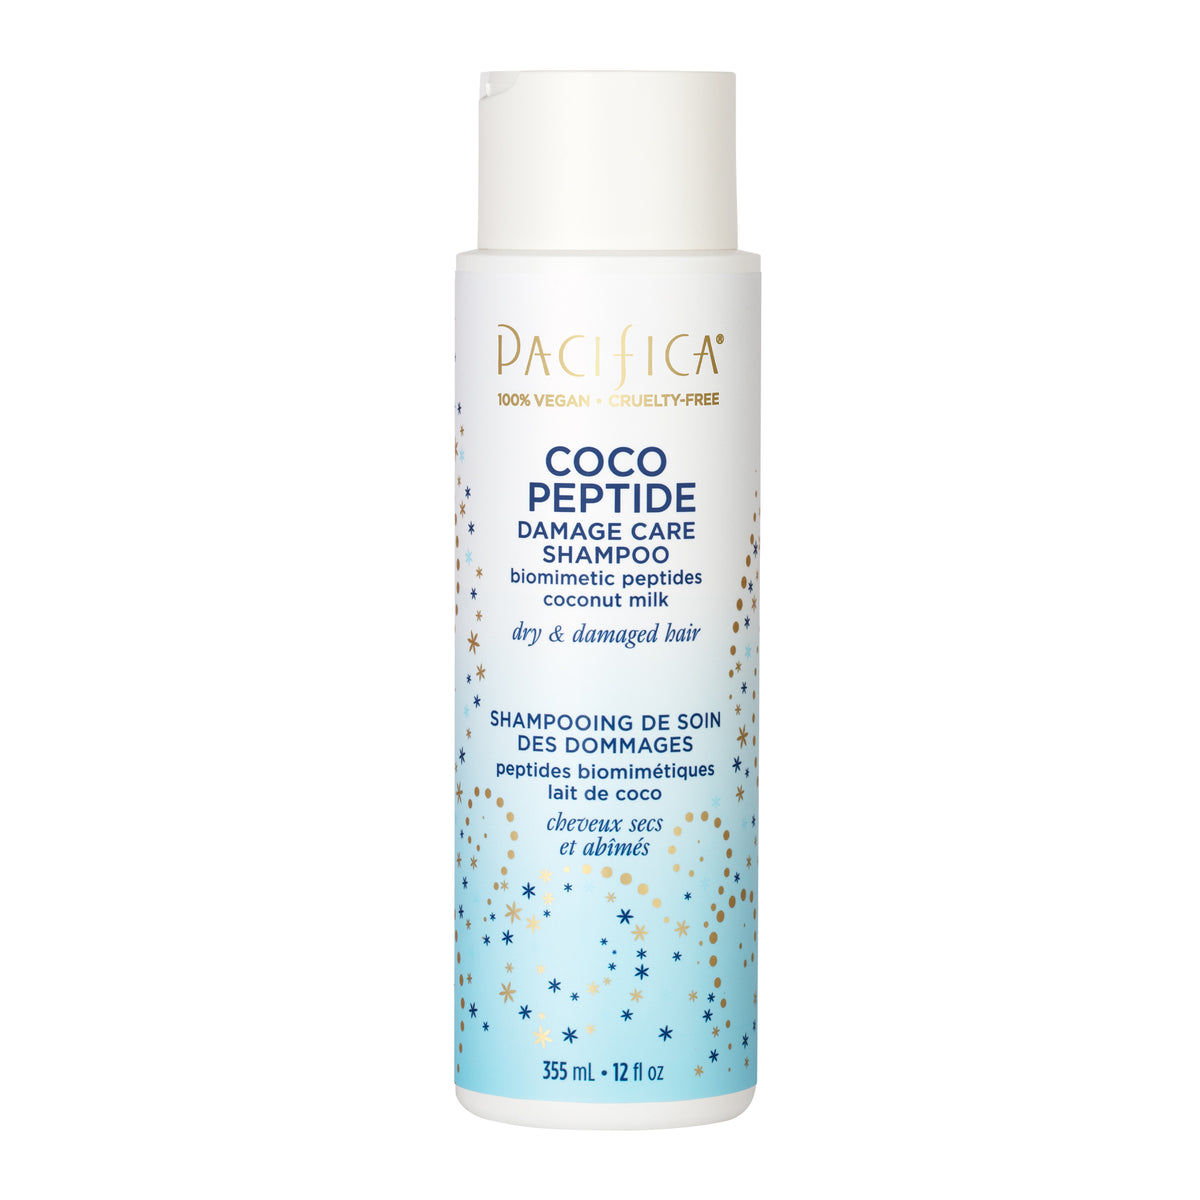 Coco Peptide Damage Care Shampoo - Haircare - Pacifica Beauty